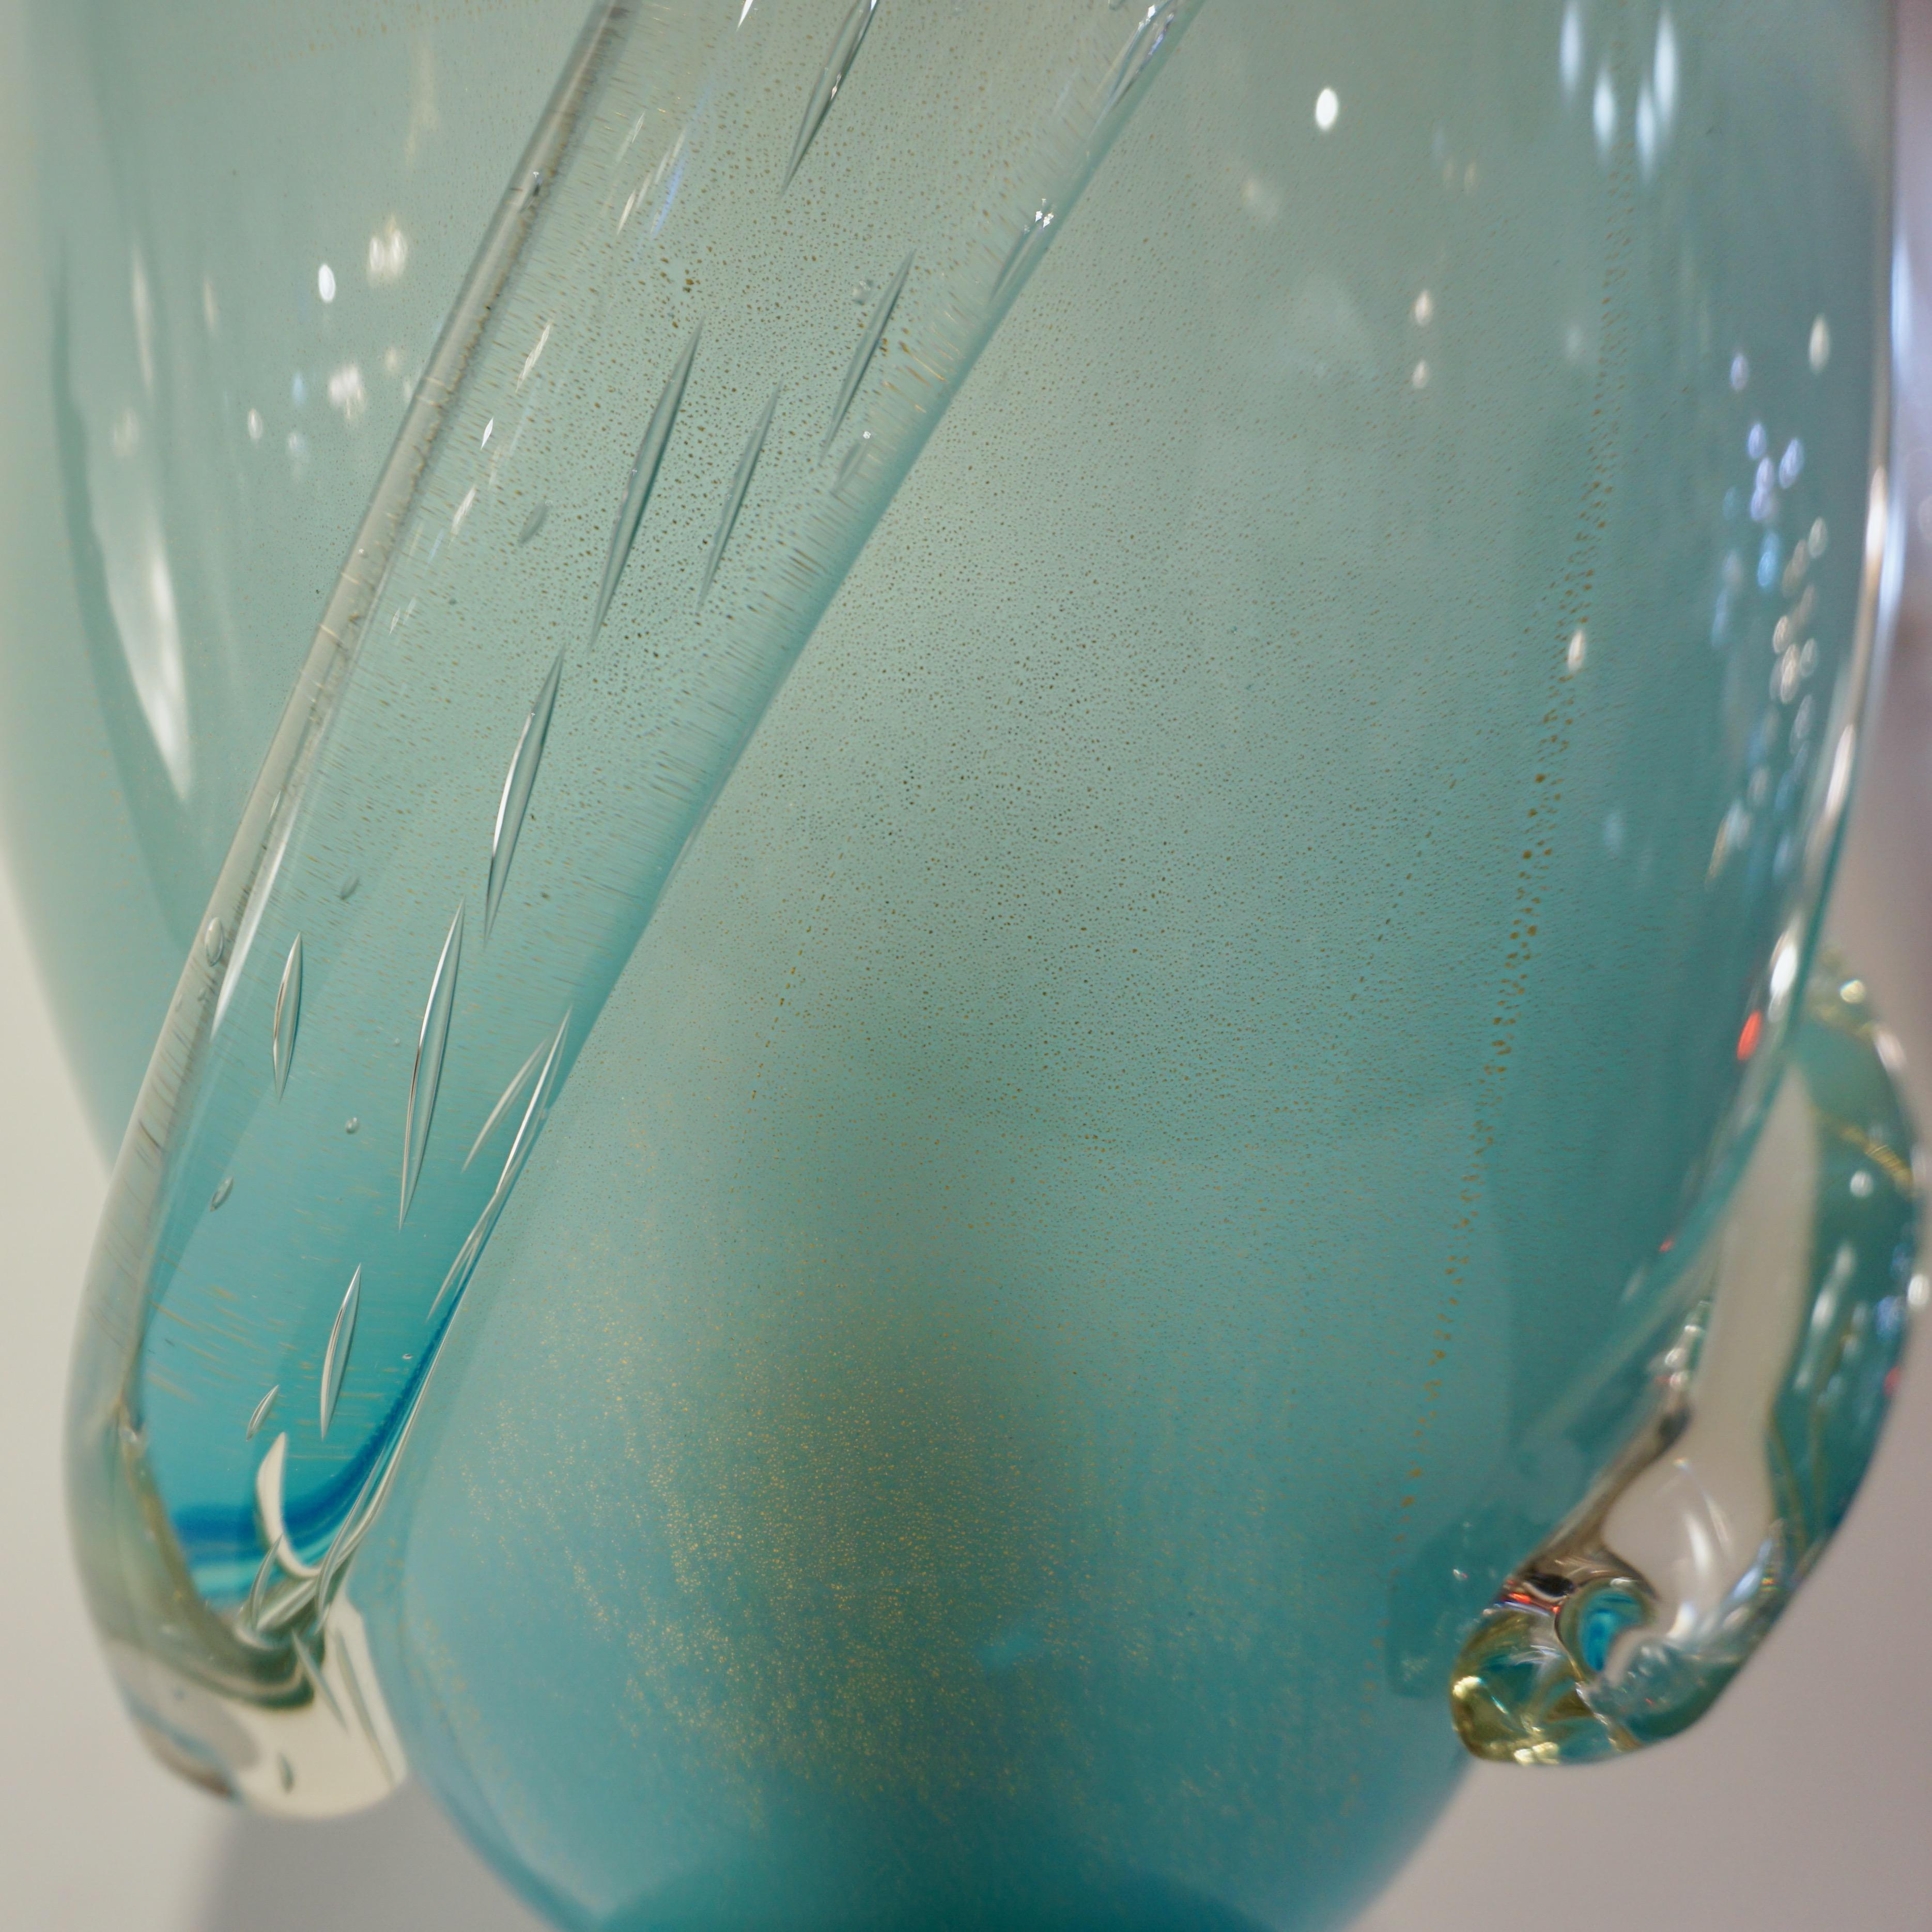 Barovier Toso Contemporary Italian Modern Aqua Blue Murano Glass Organic Lamp For Sale 8